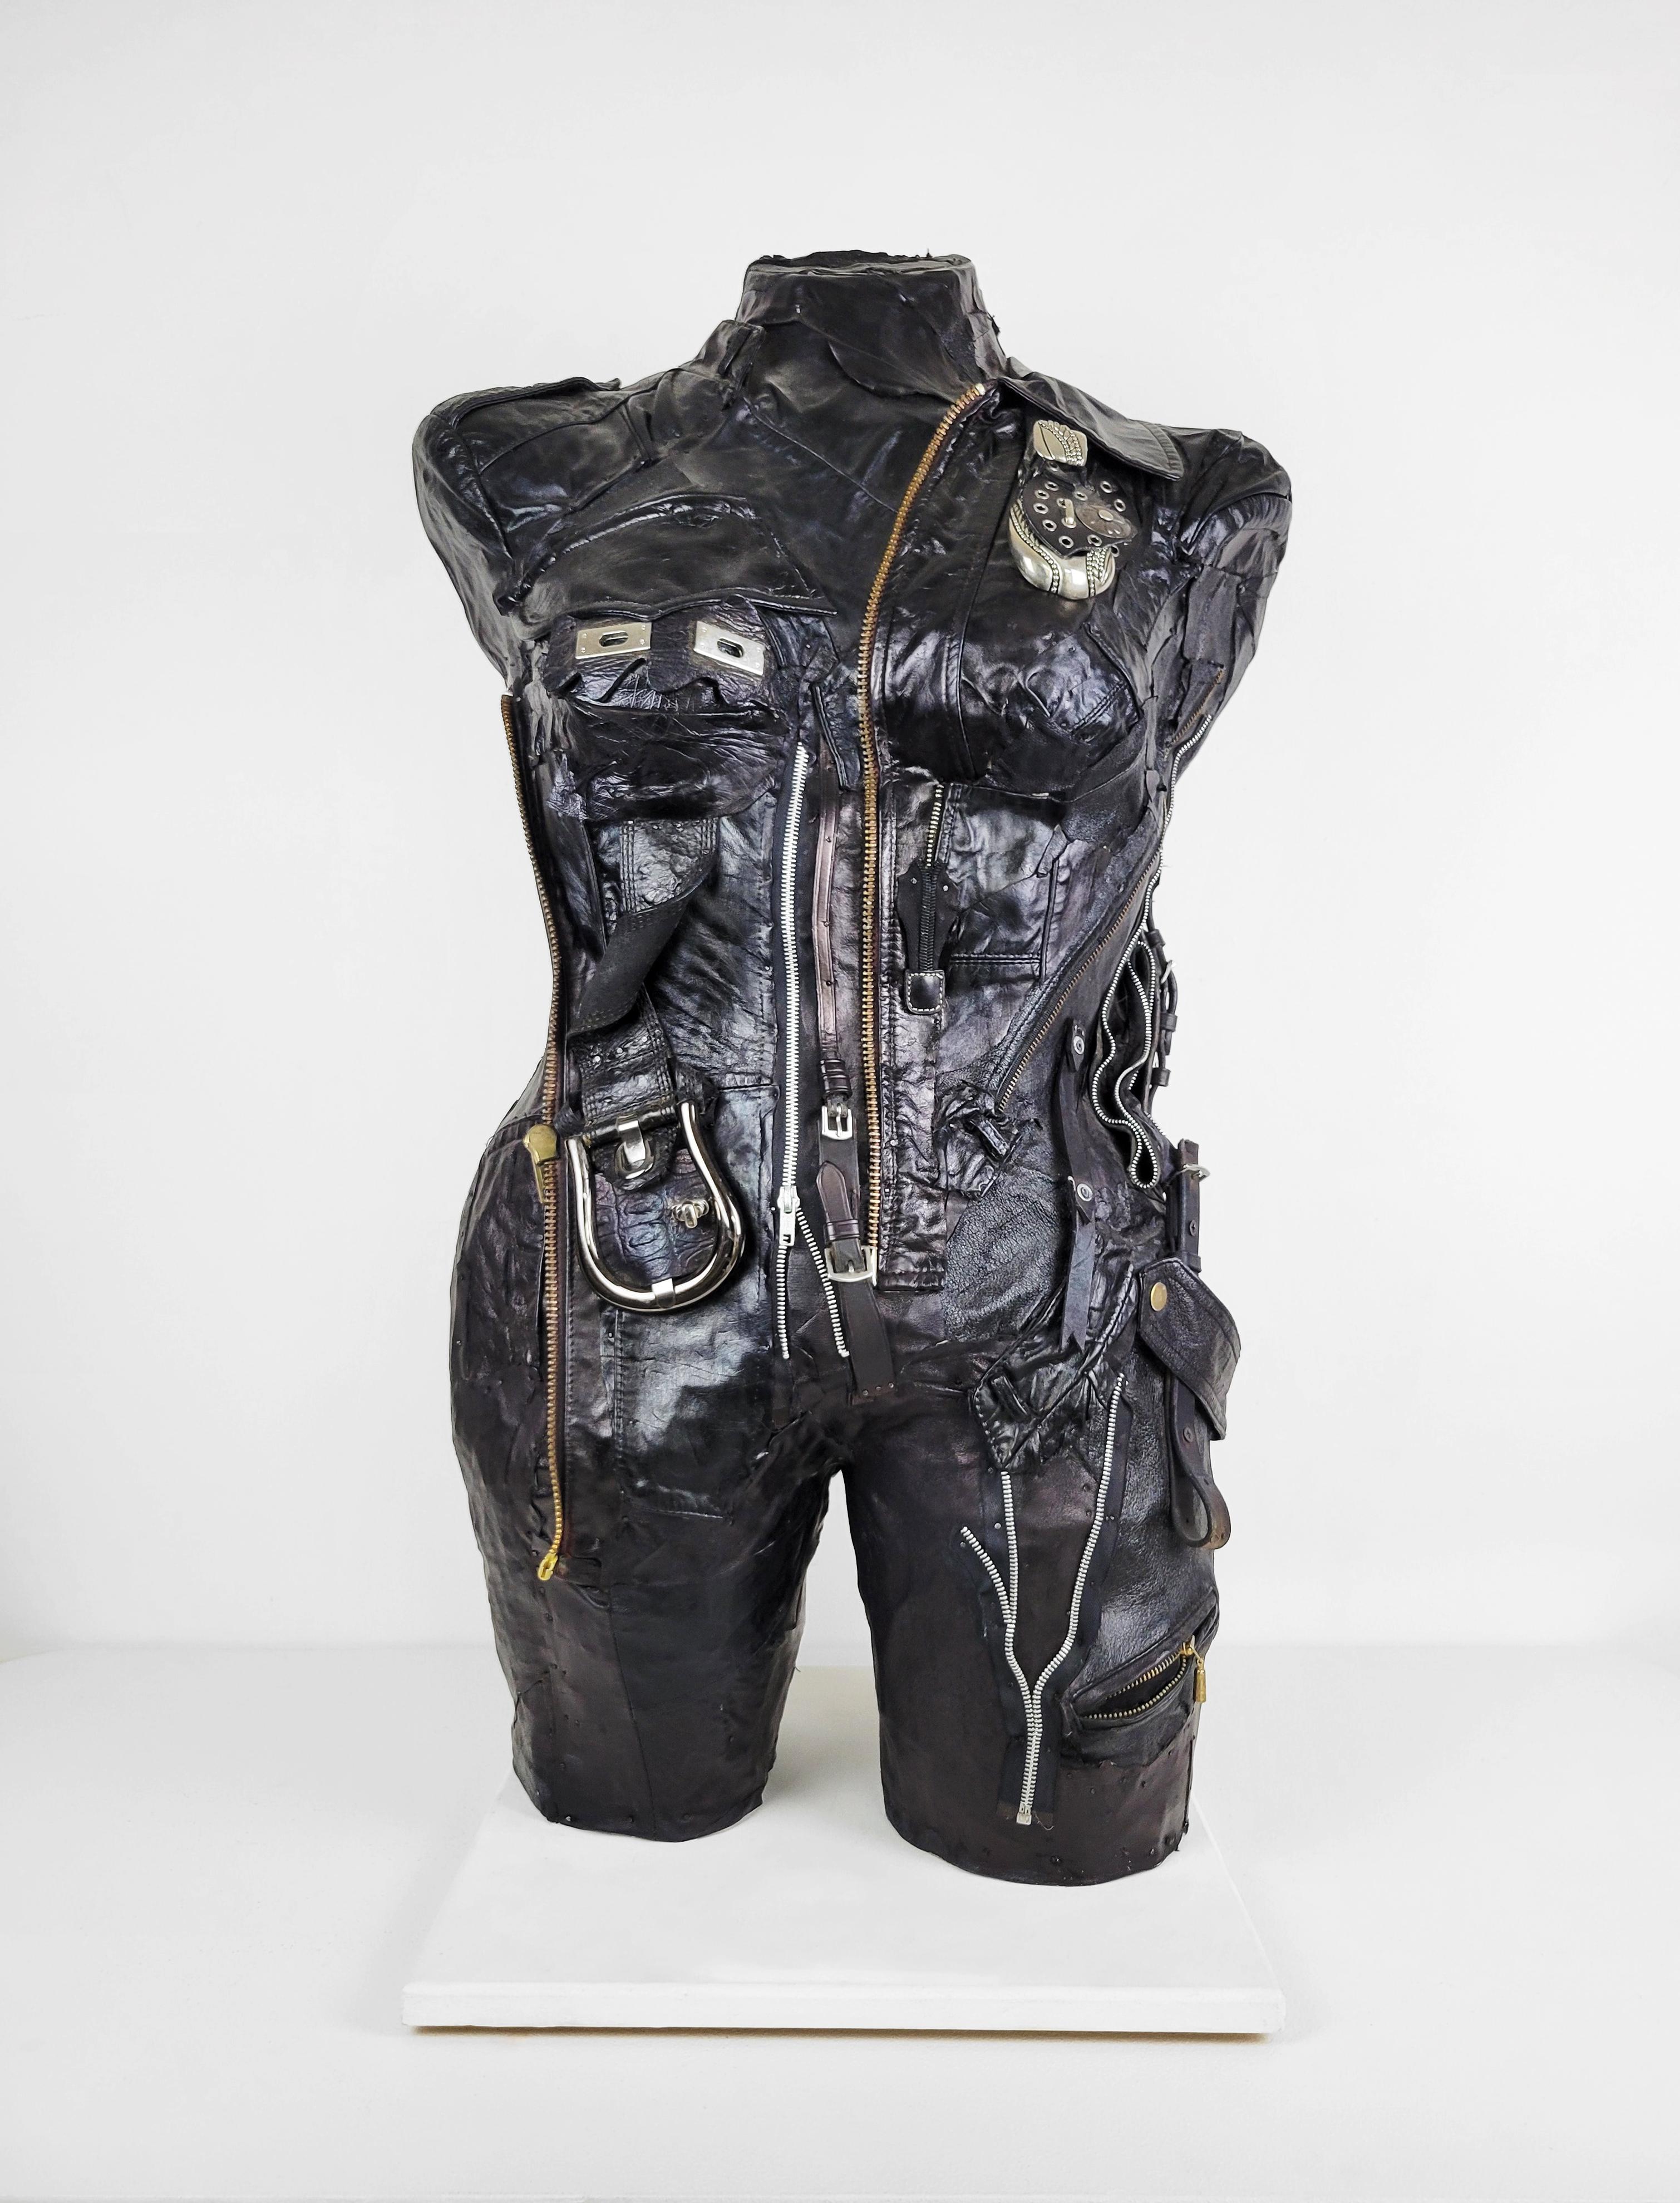 Linda Stein Figurative Sculpture - Feminist Contemporary Black/Silver Leather Metal Torso Sculpture - On Alert 691 